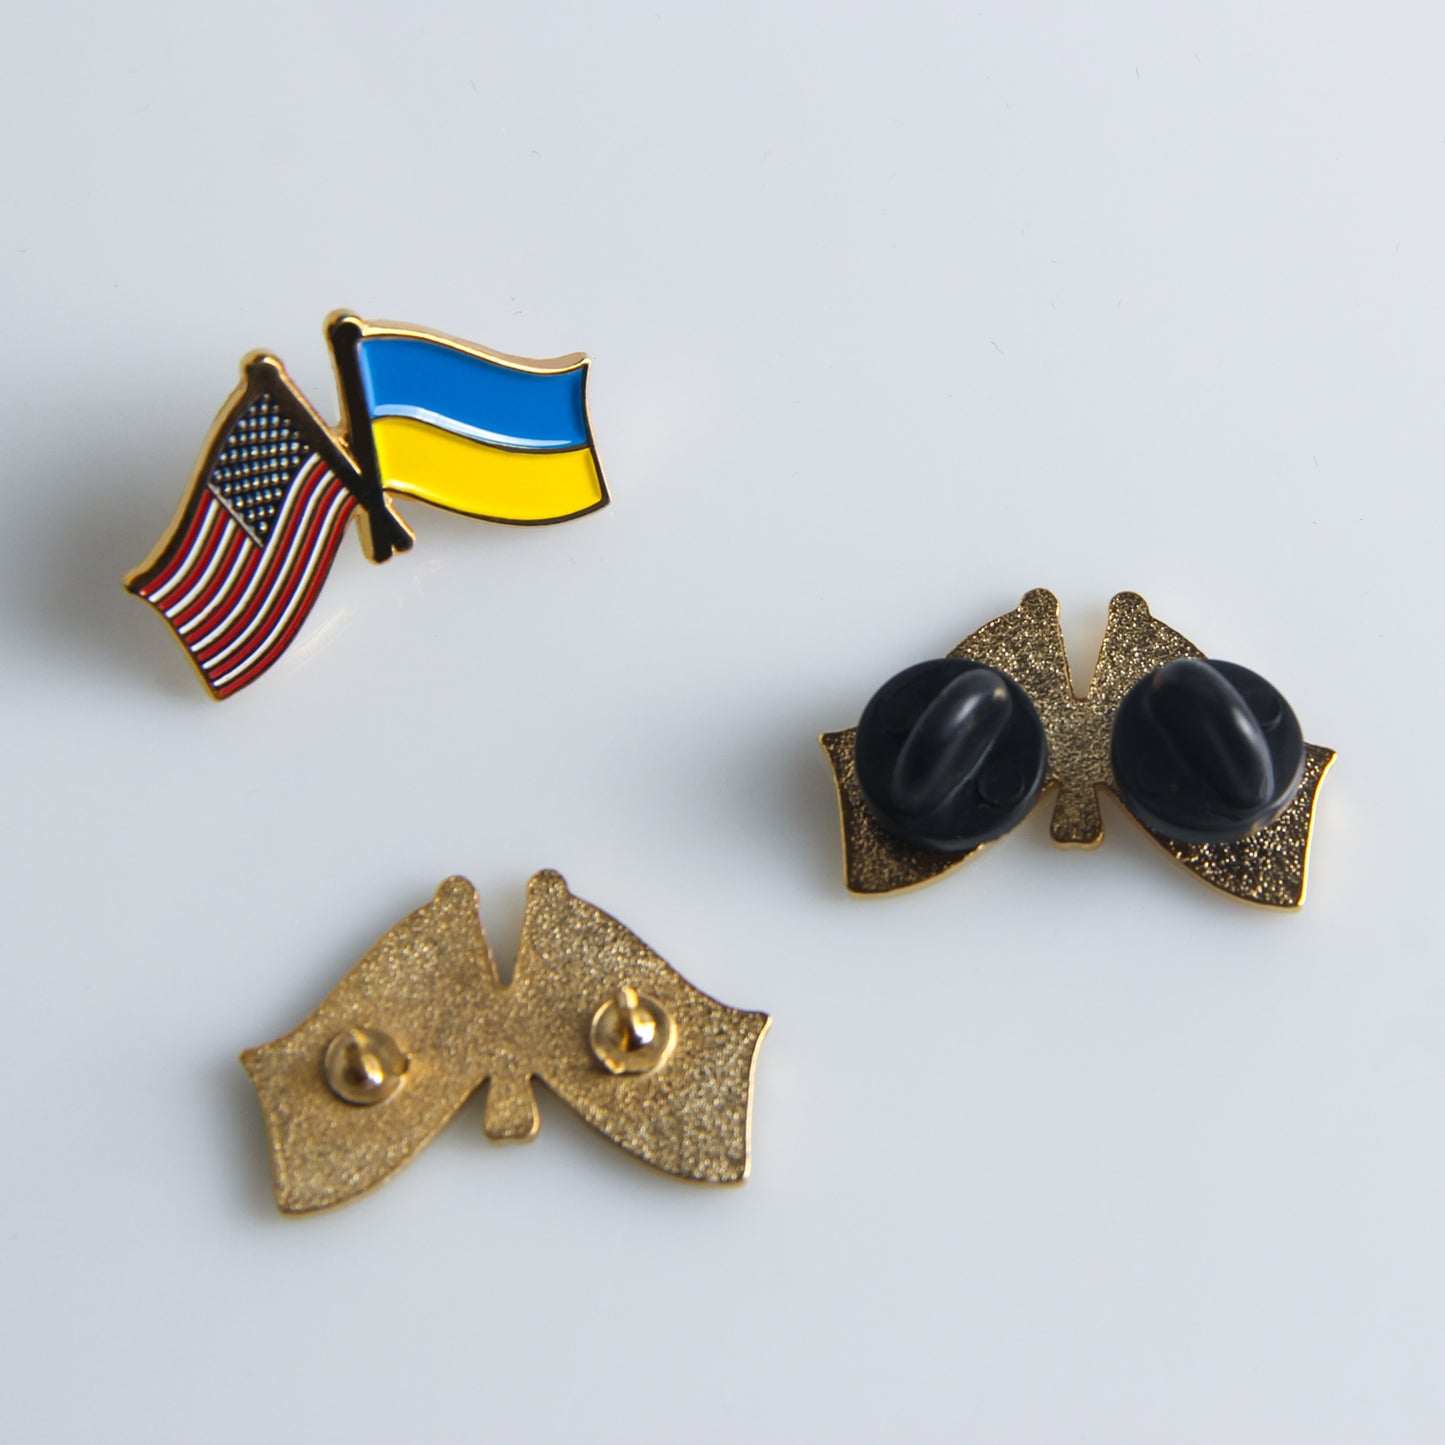 USA and Ukraine Friendship Flag Lapel Pins